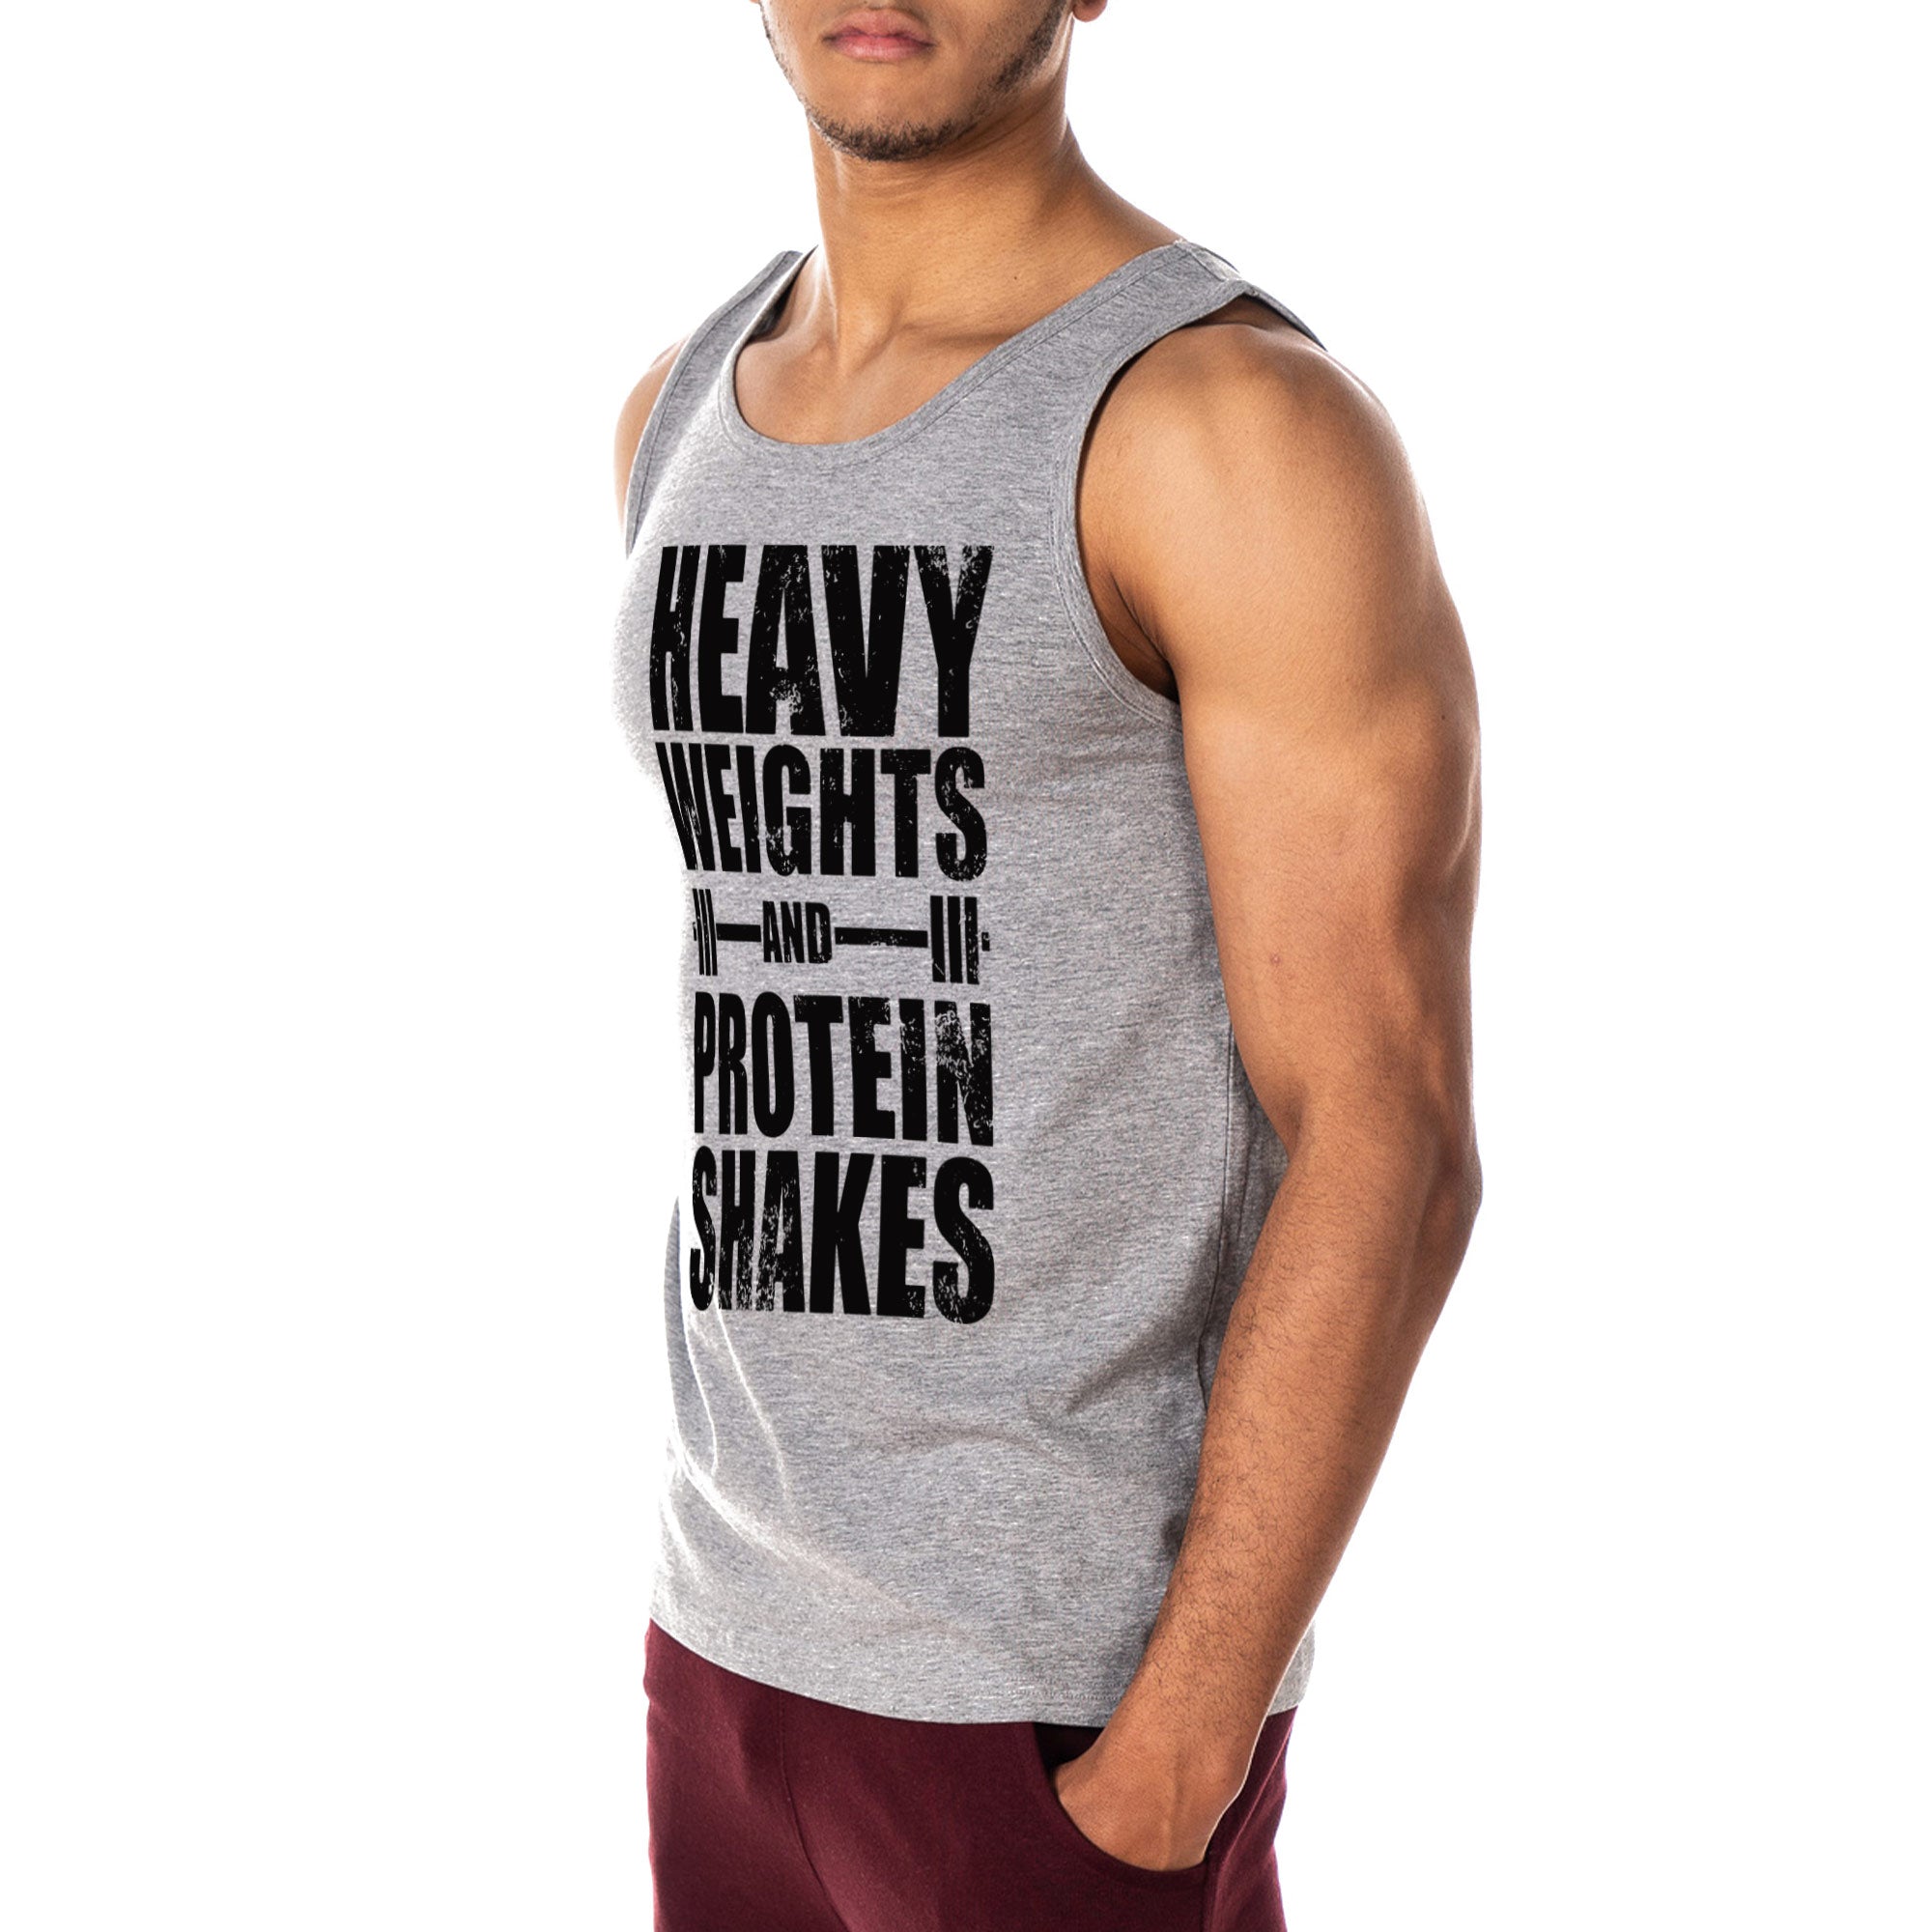 Heavy Weights & Protein Shakes Gym Vest